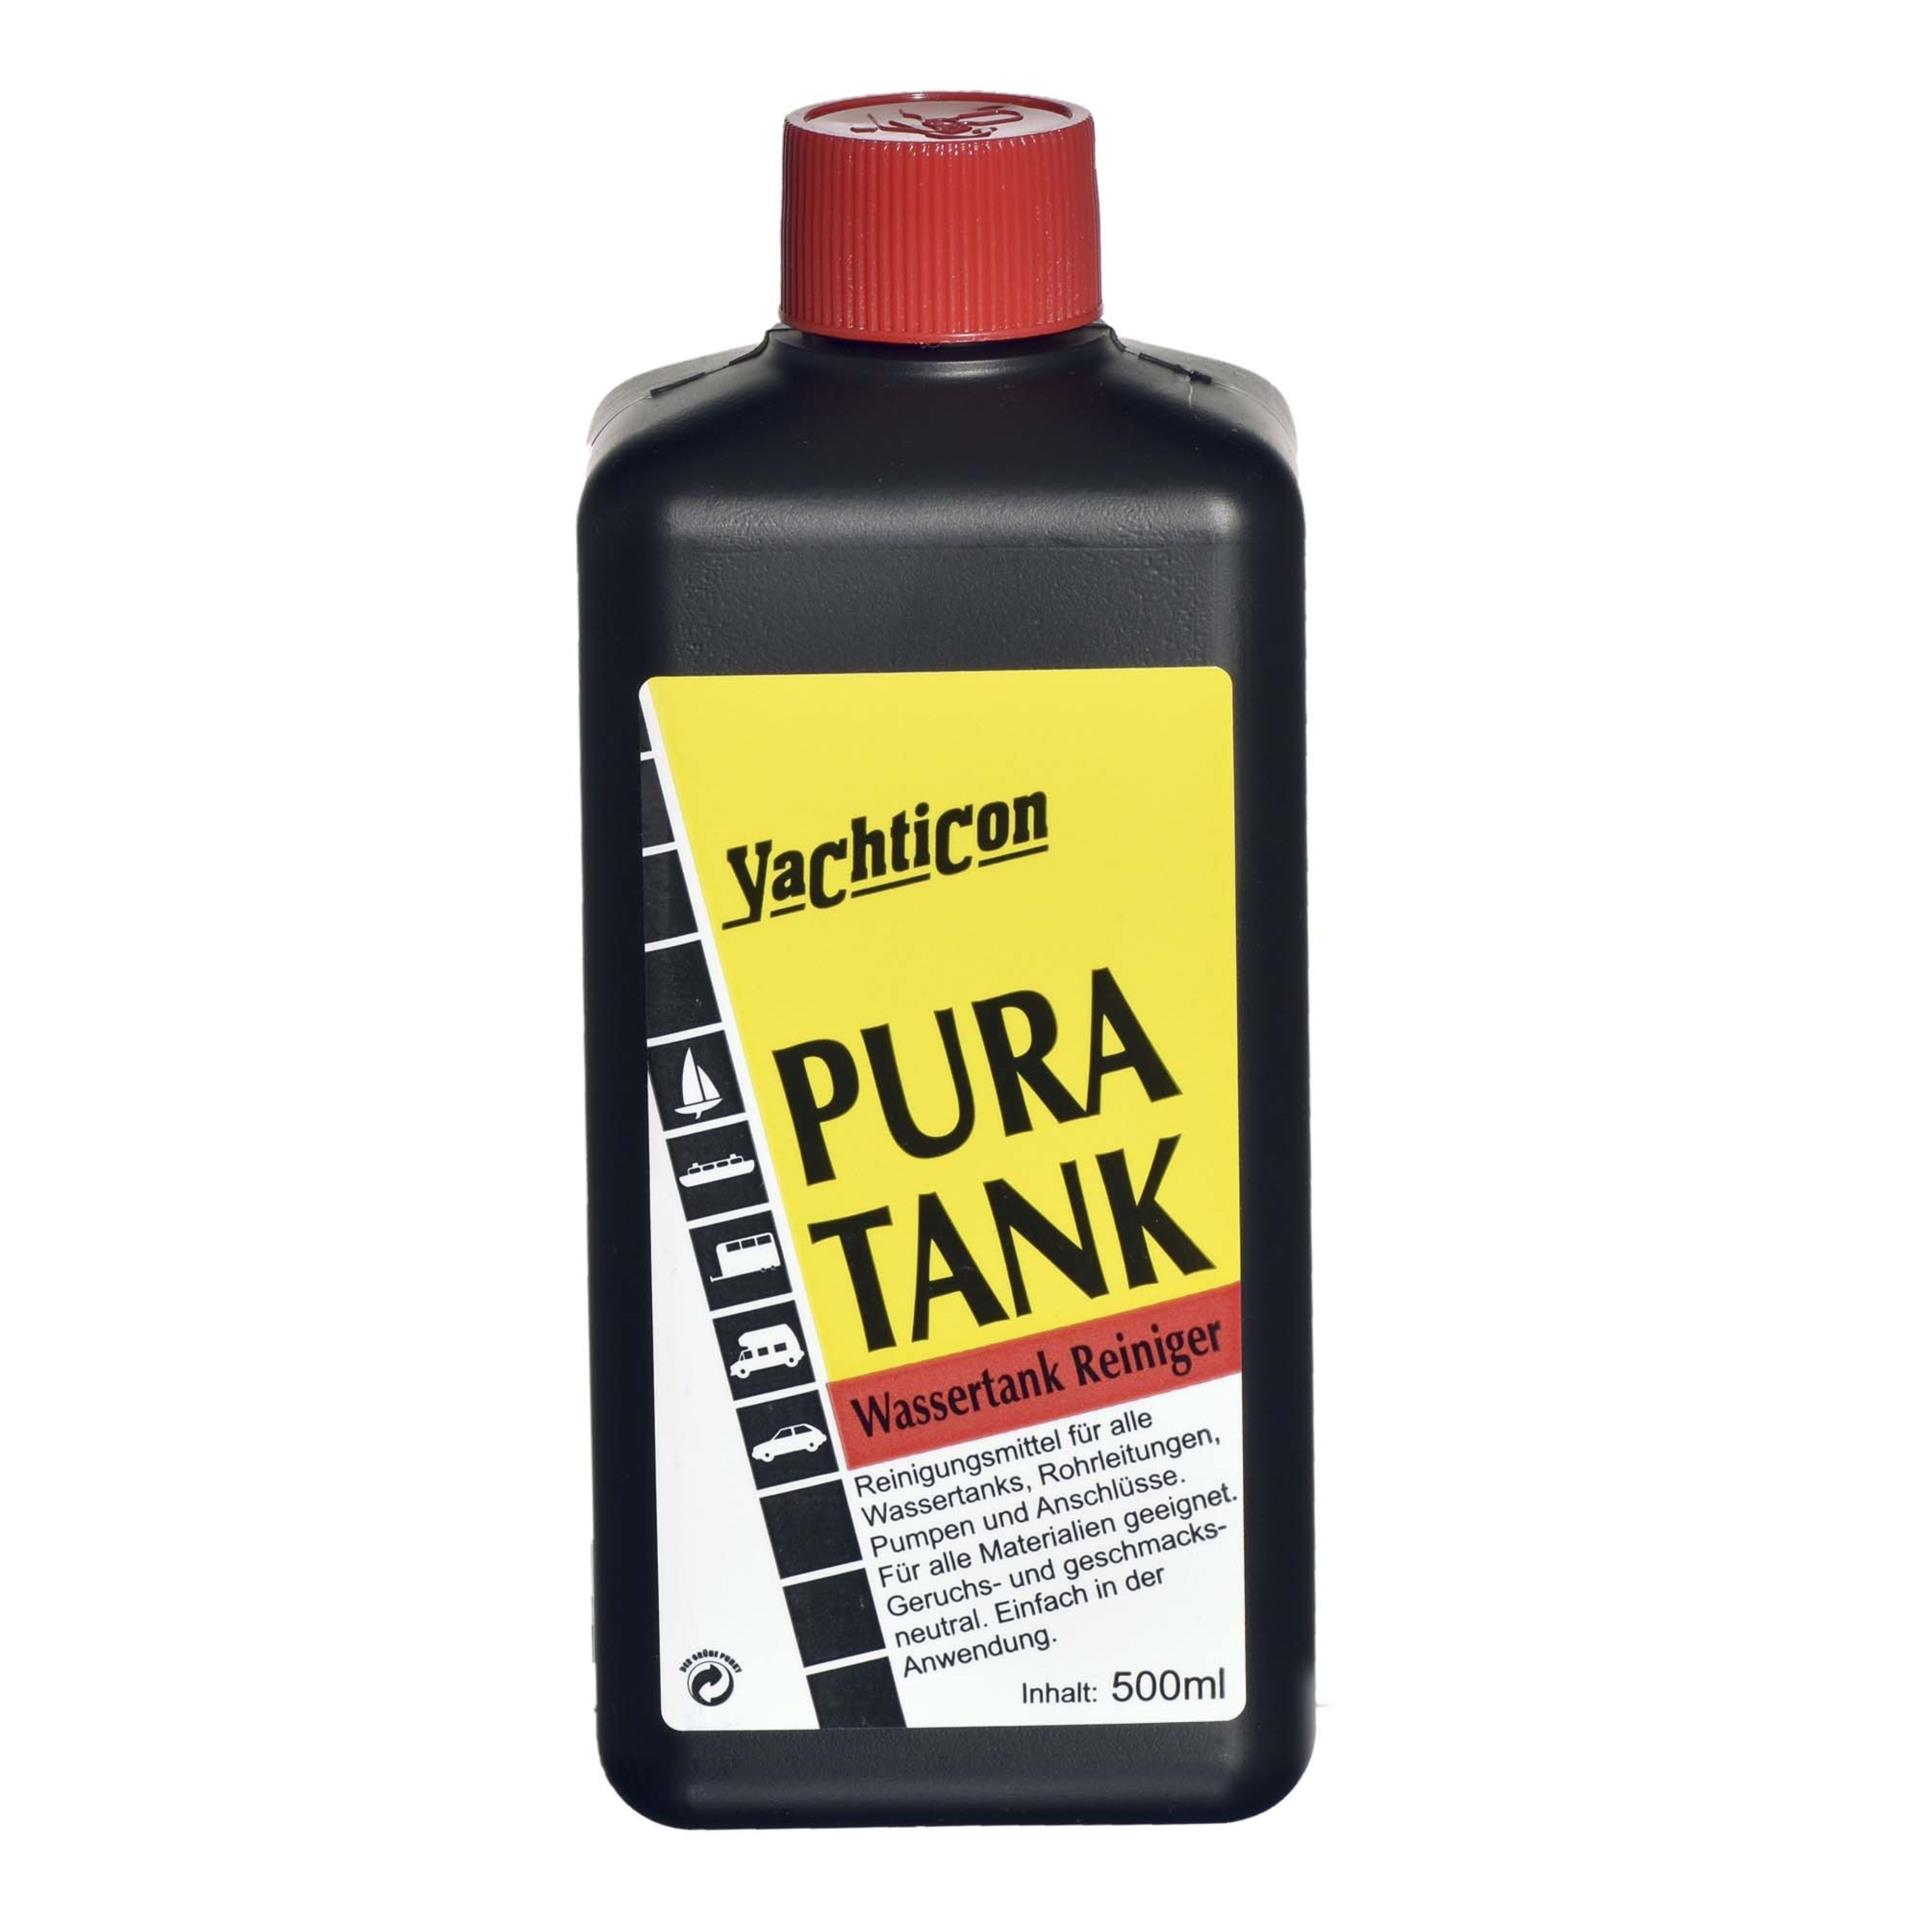 Yachticon Pura Tank, 500 ml